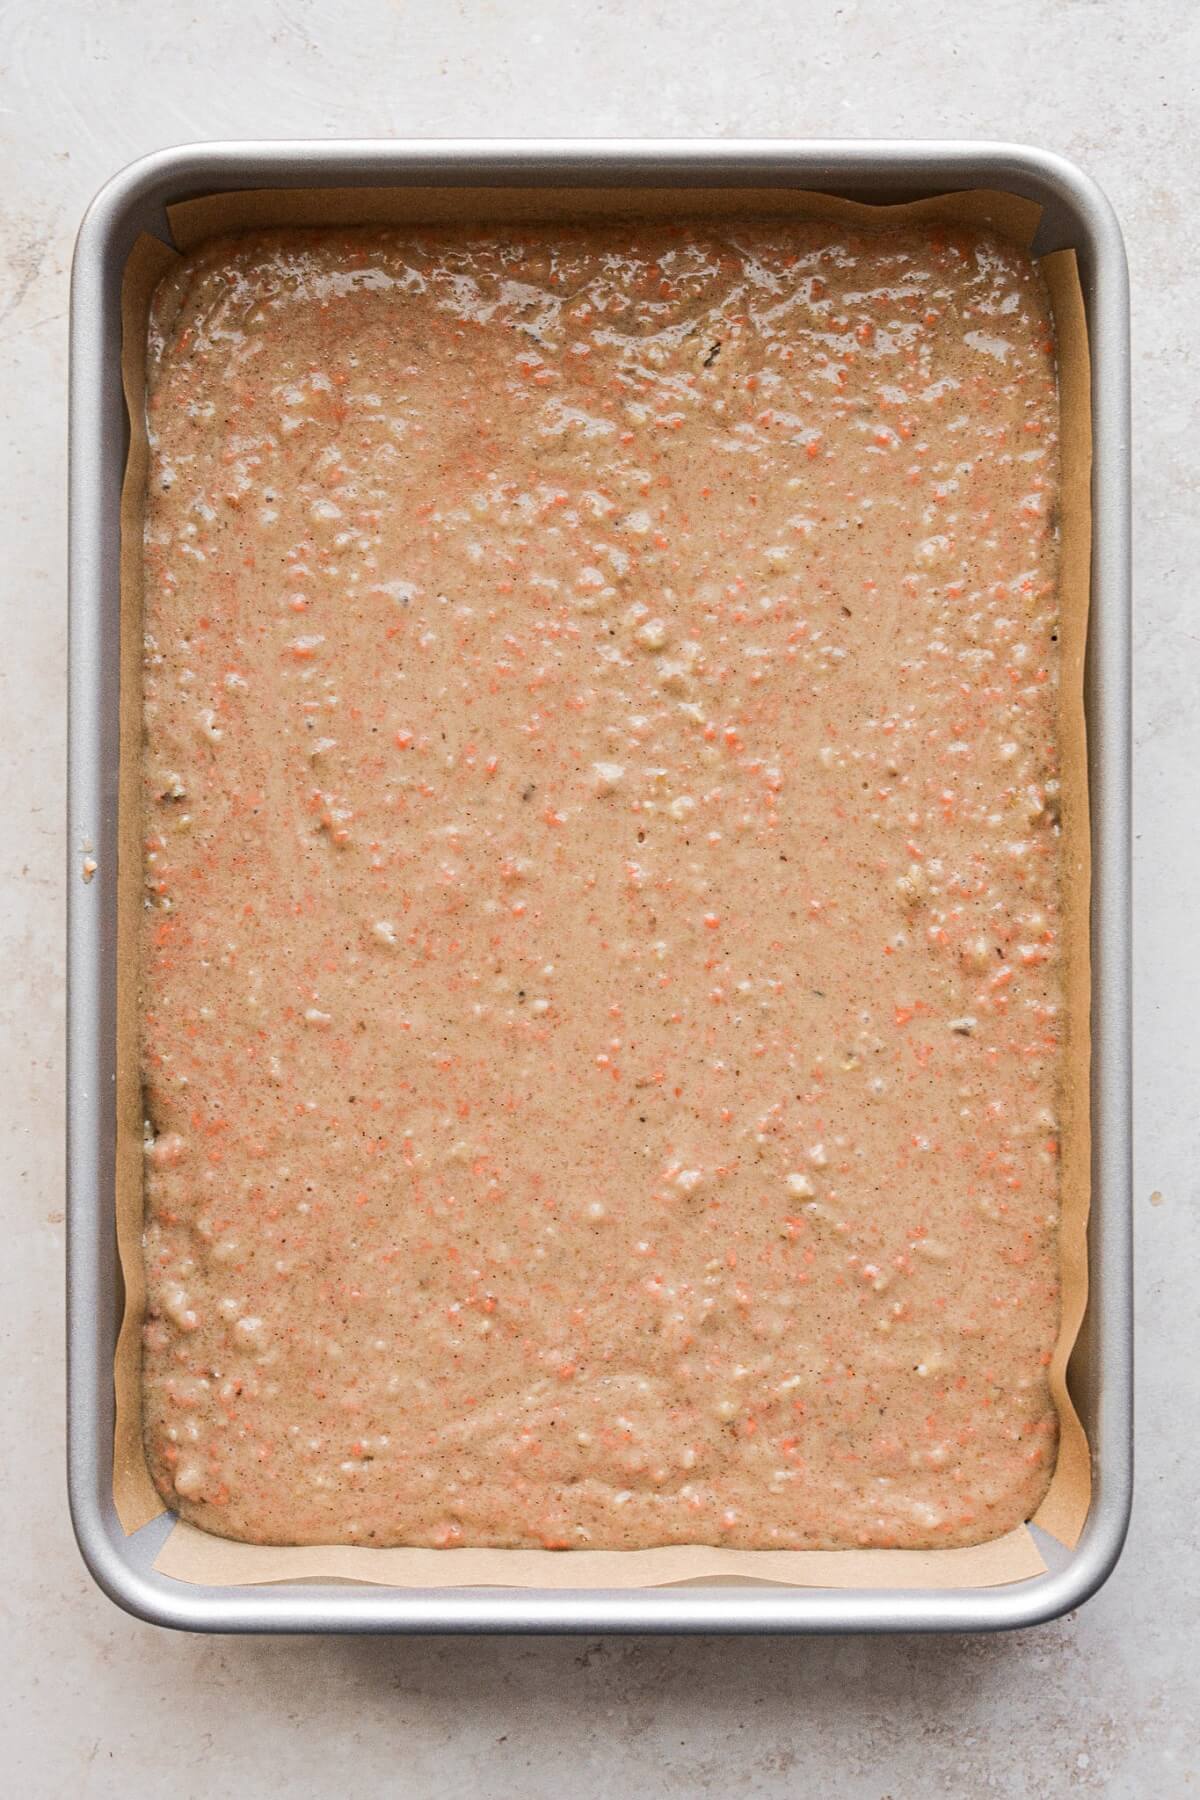 Sheet pan with carrot cake batter.